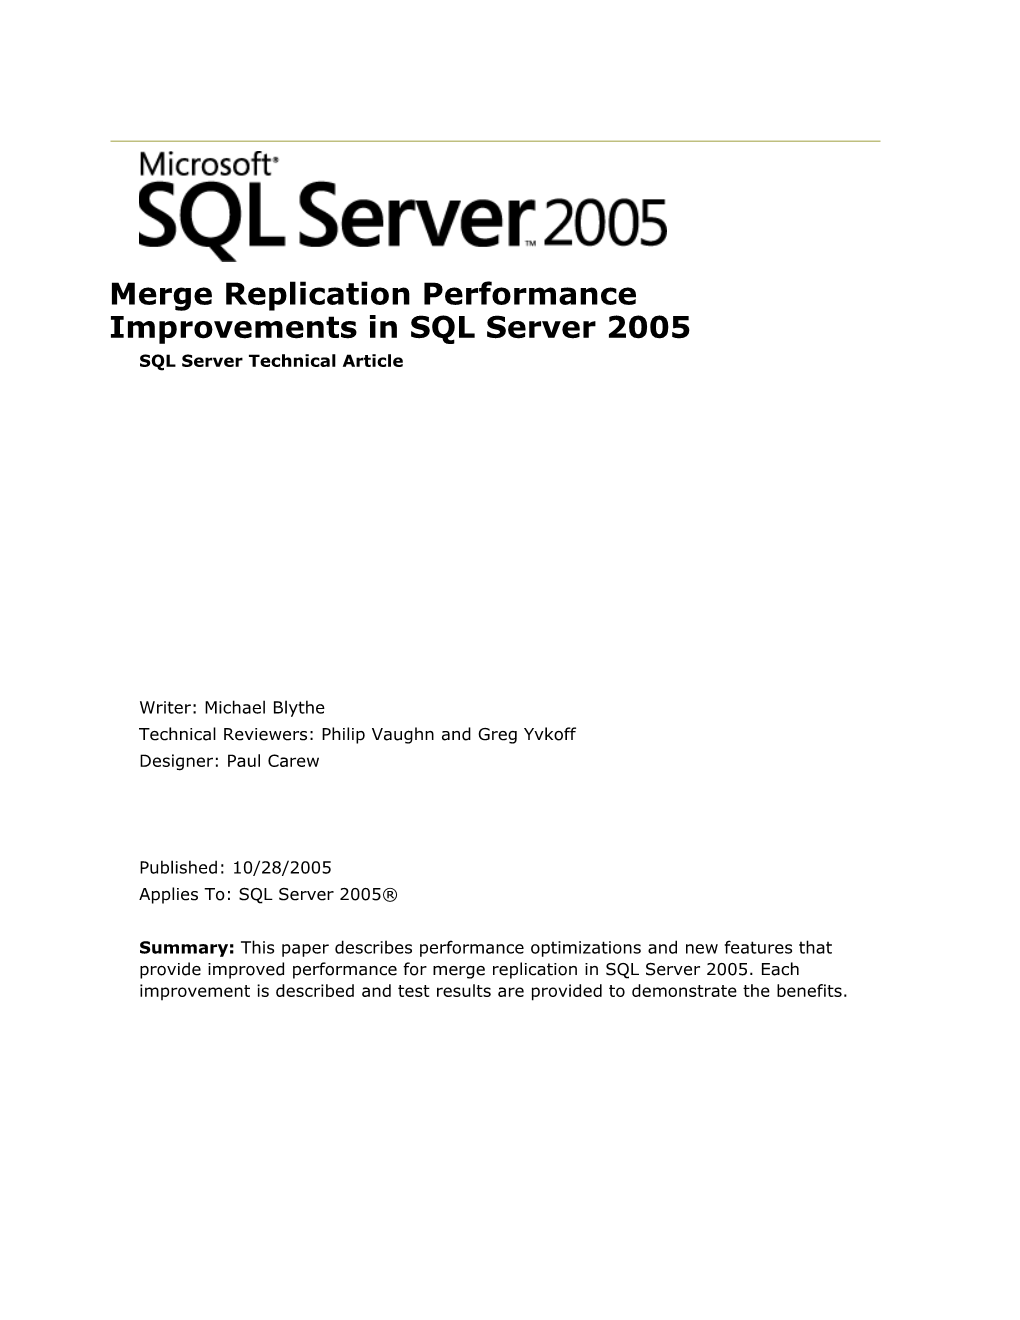 Merge Replication Performance Improvements in SQL Server 2005